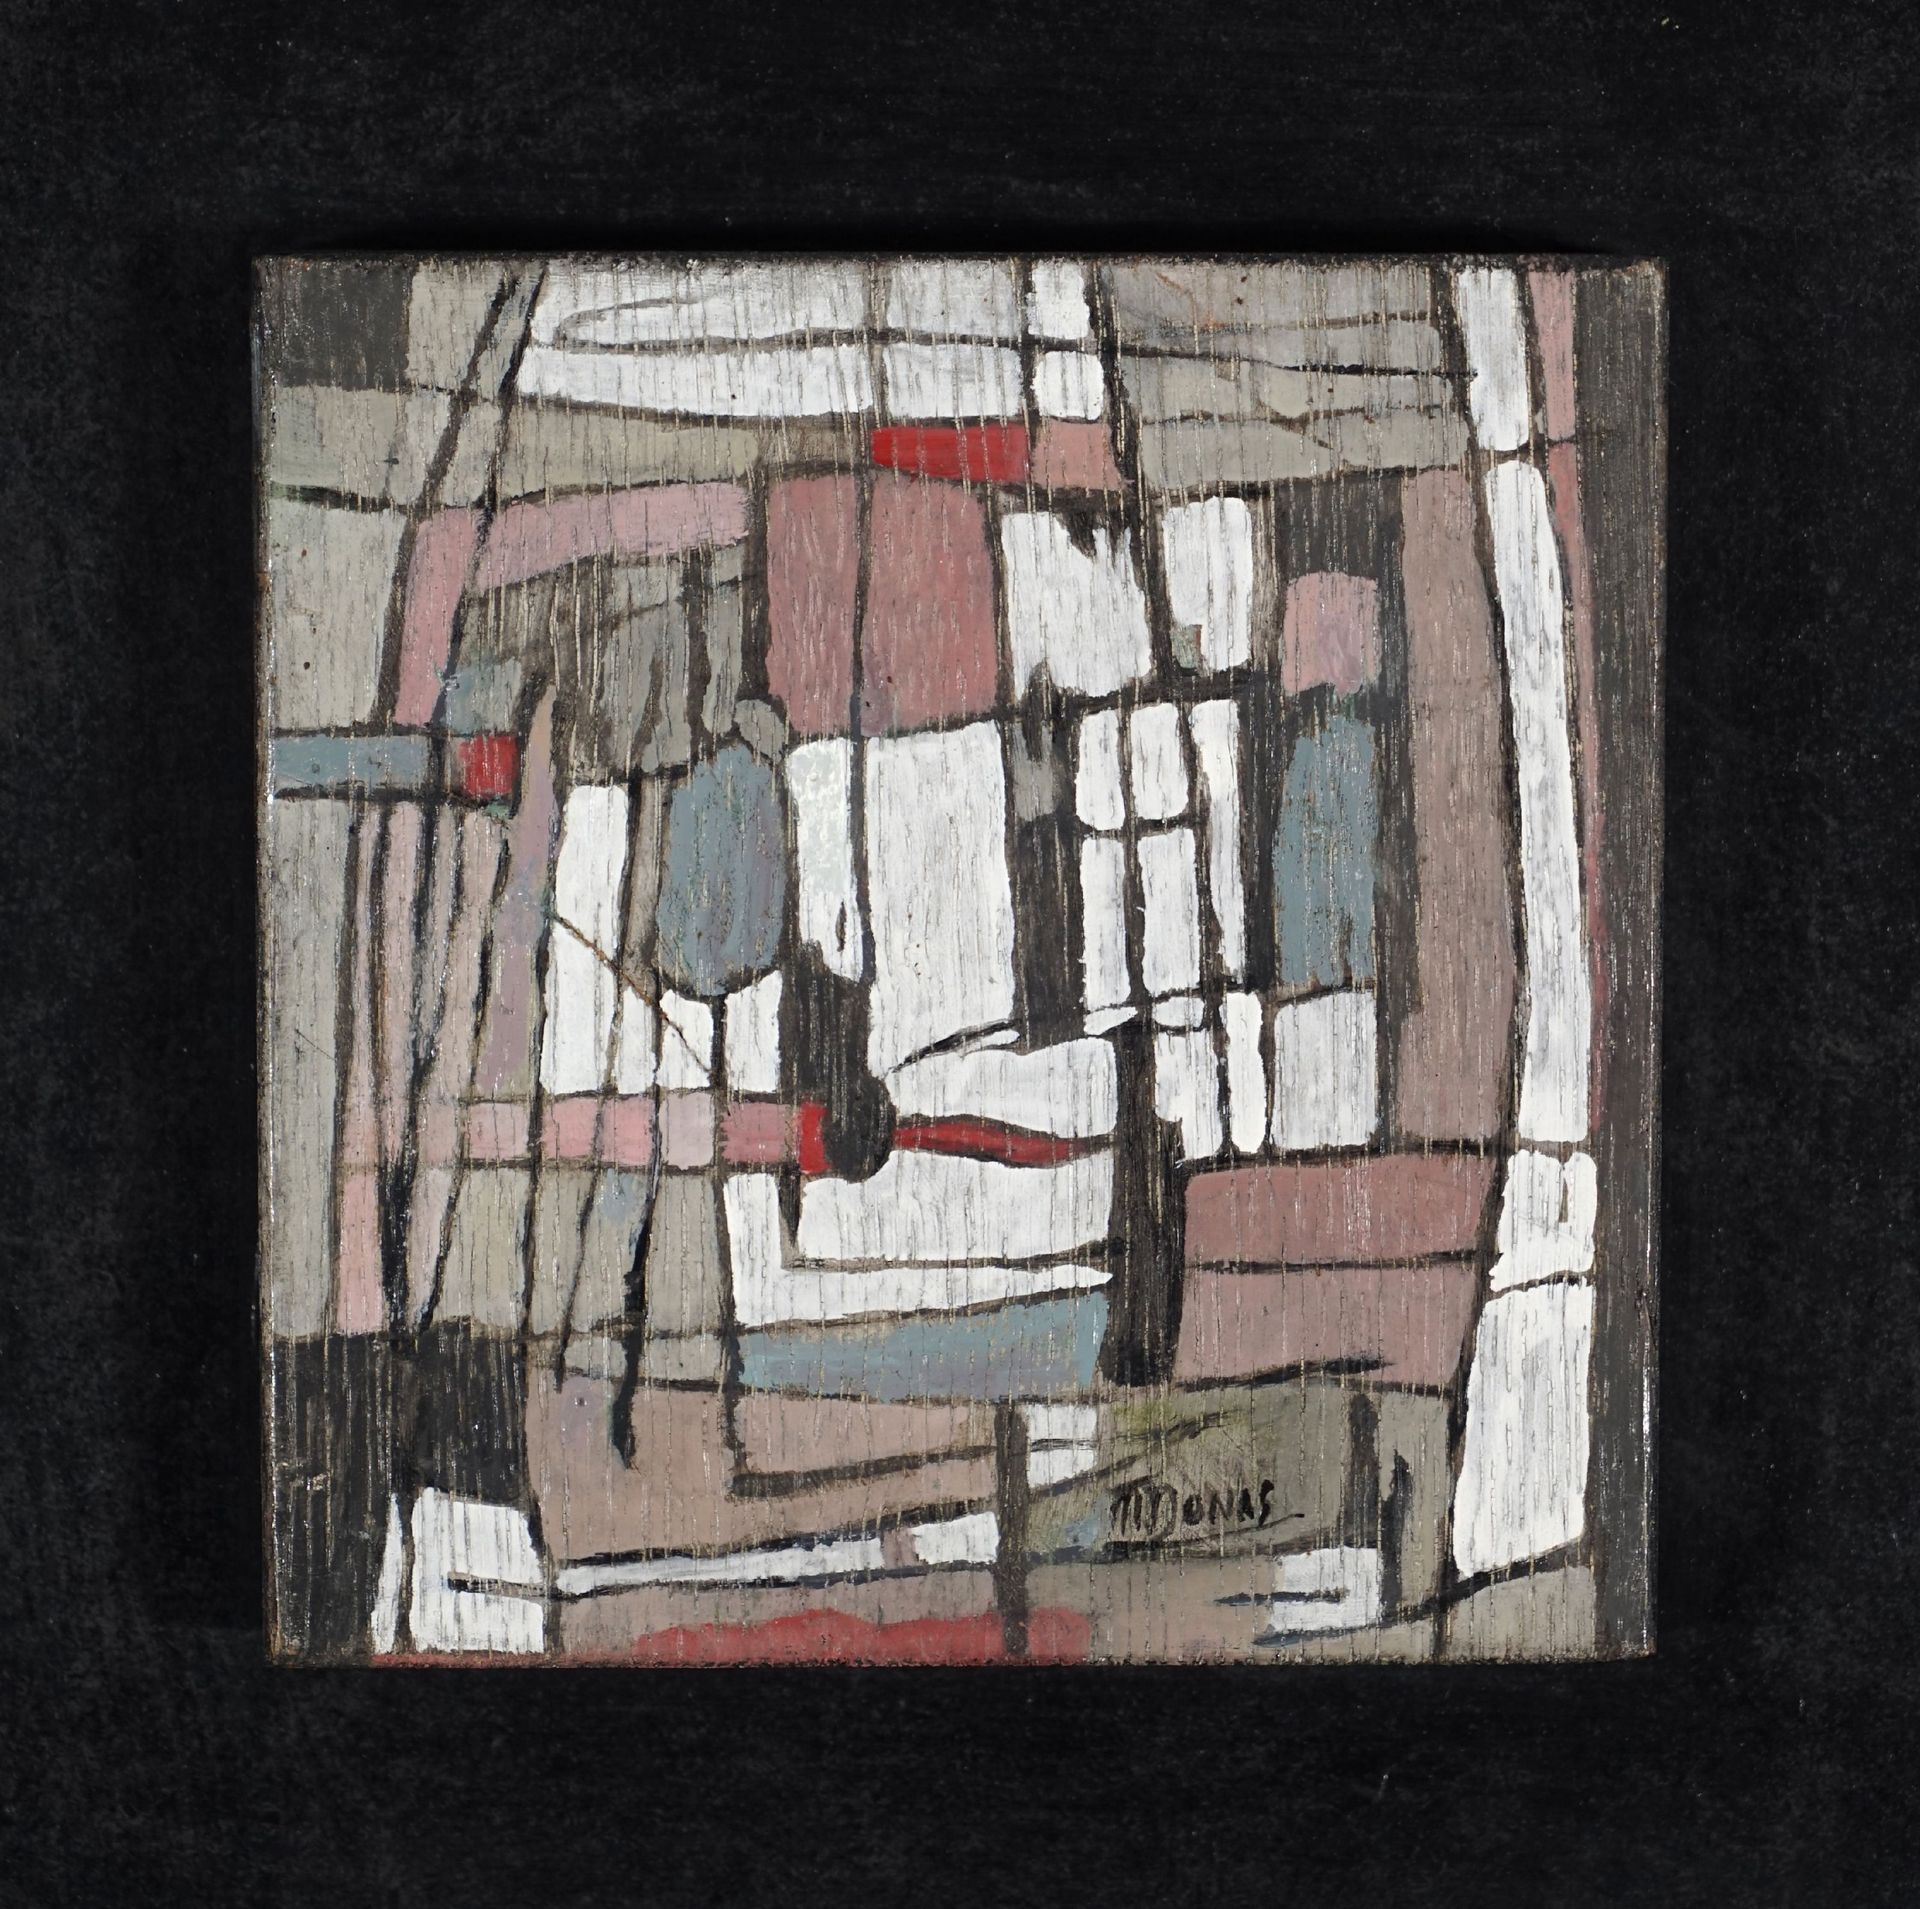 Marthe DONAS
Petite abstraction n°1, 1961
Huile sur bois
Collection du MIMDo
